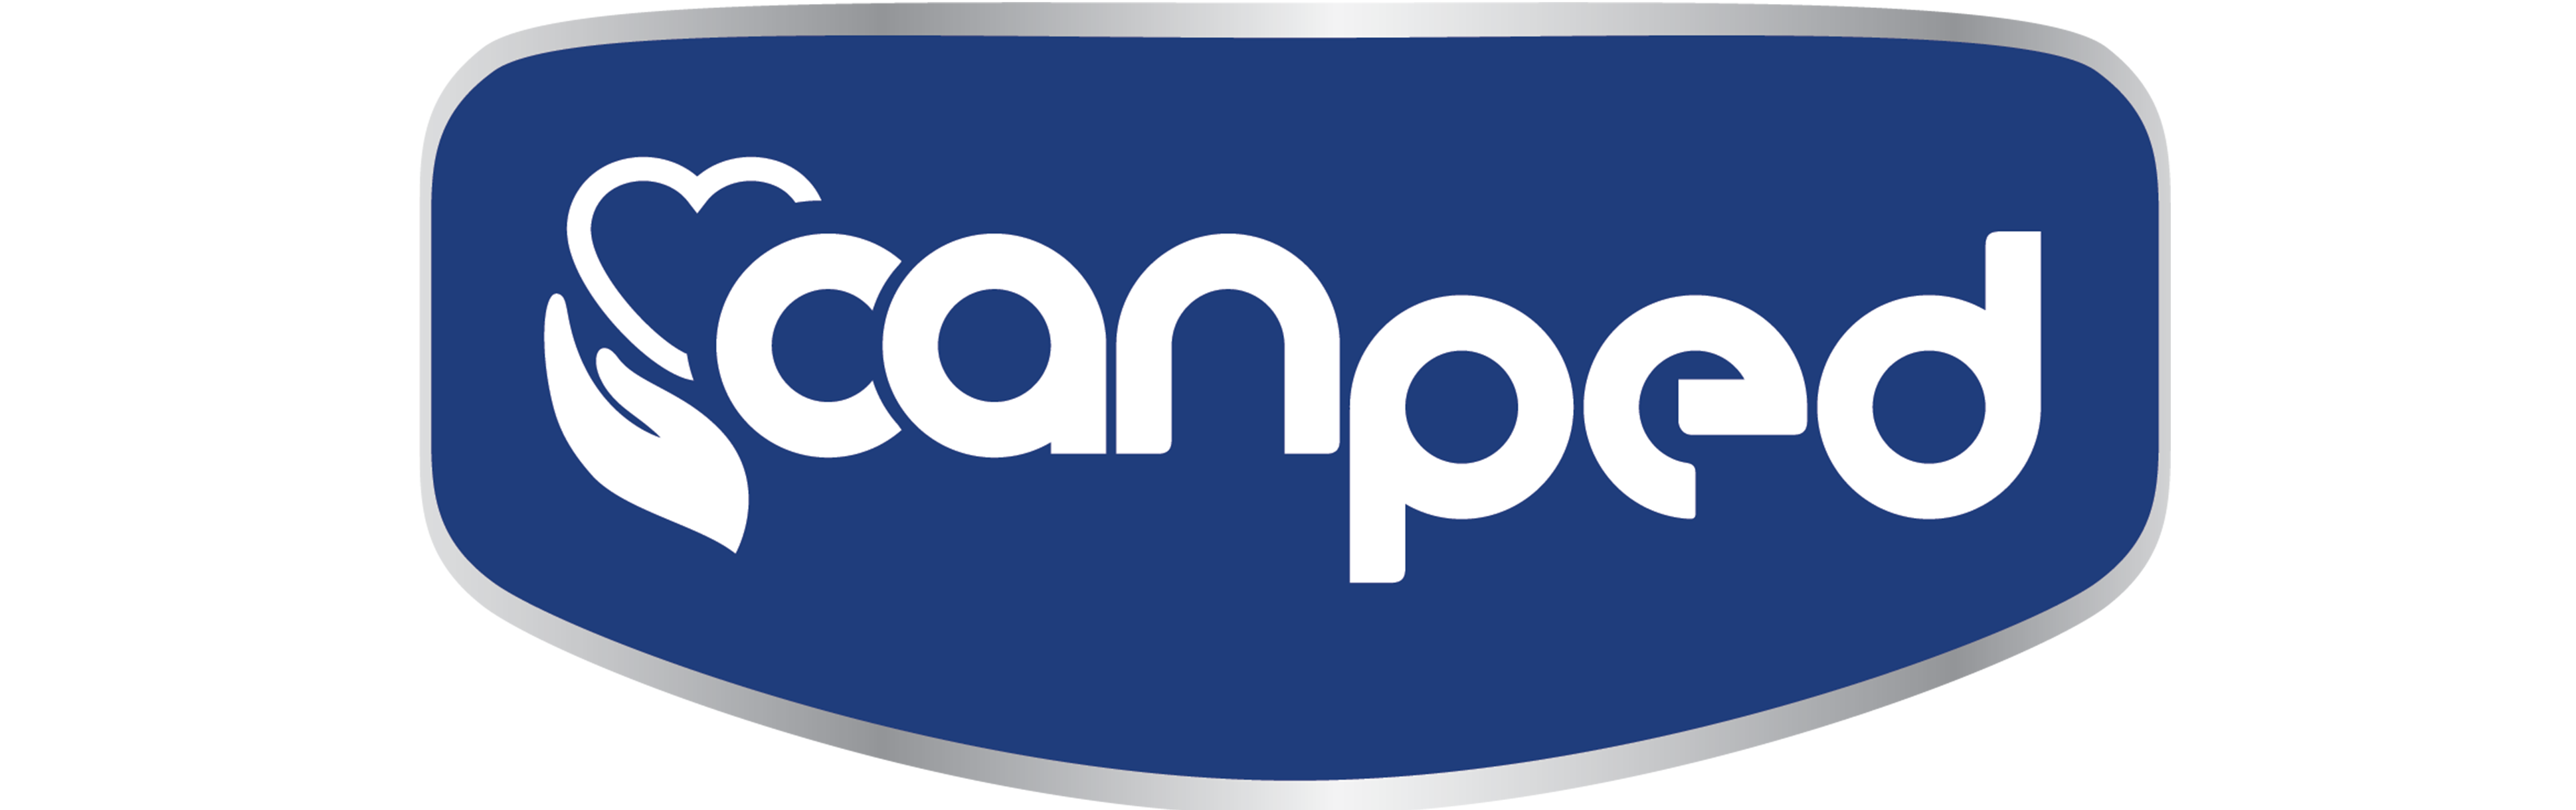 canped logo